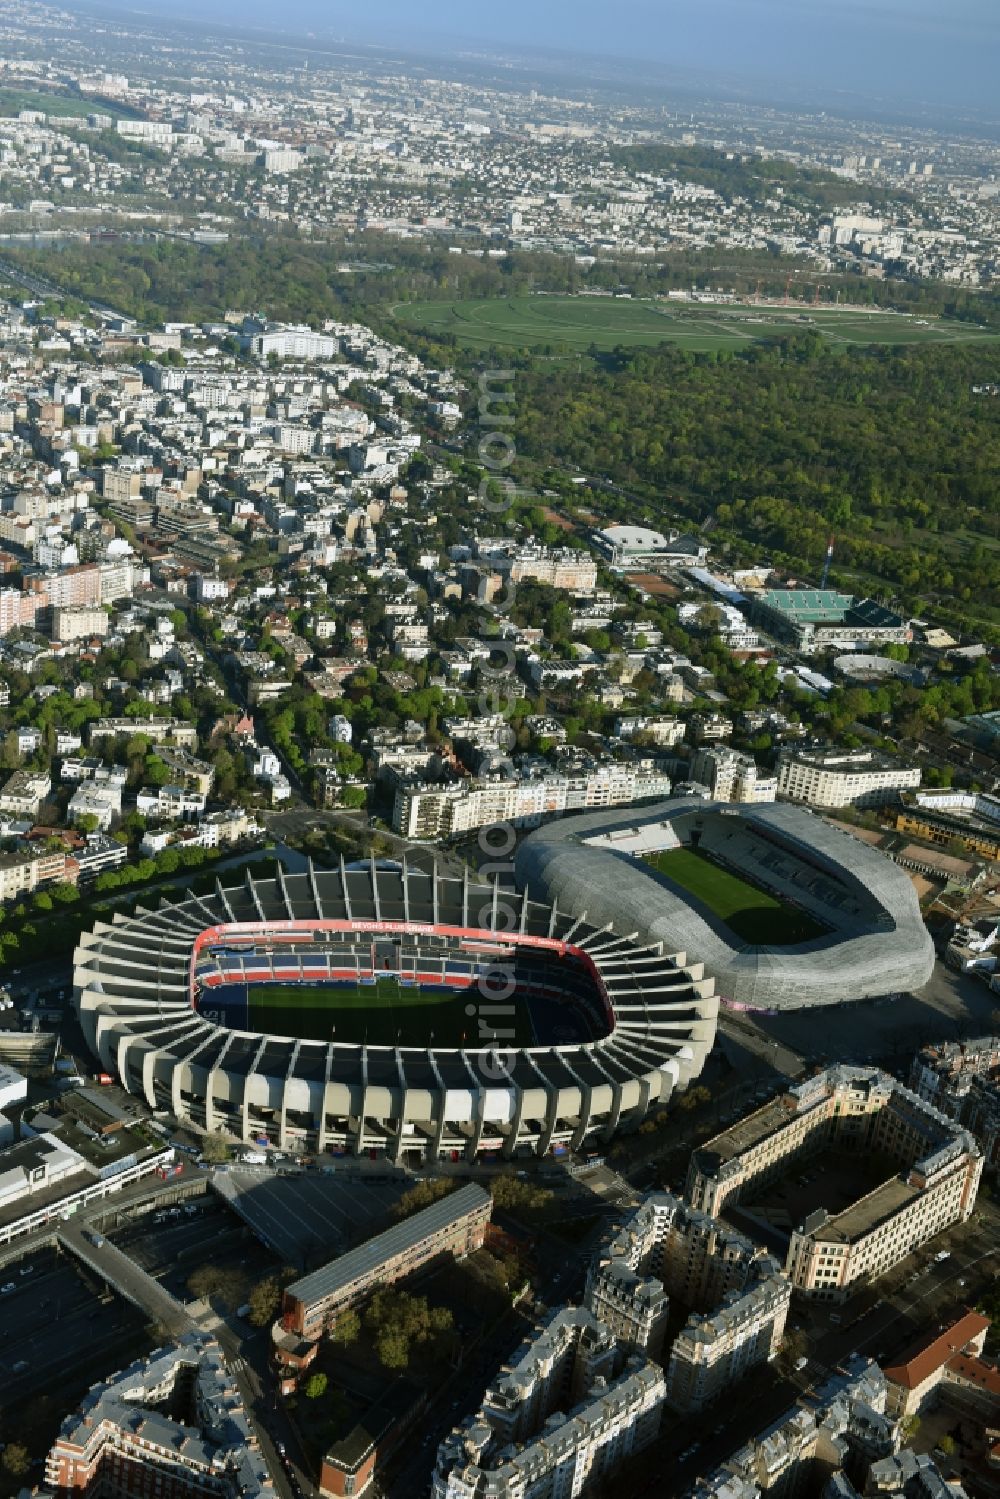 Paris from above - Sports facility grounds of the arena of the stadium Parc des Princes on Rue du Commandant Guilbaud in Paris Boulogne-Billancourt, Ile-de-France, France